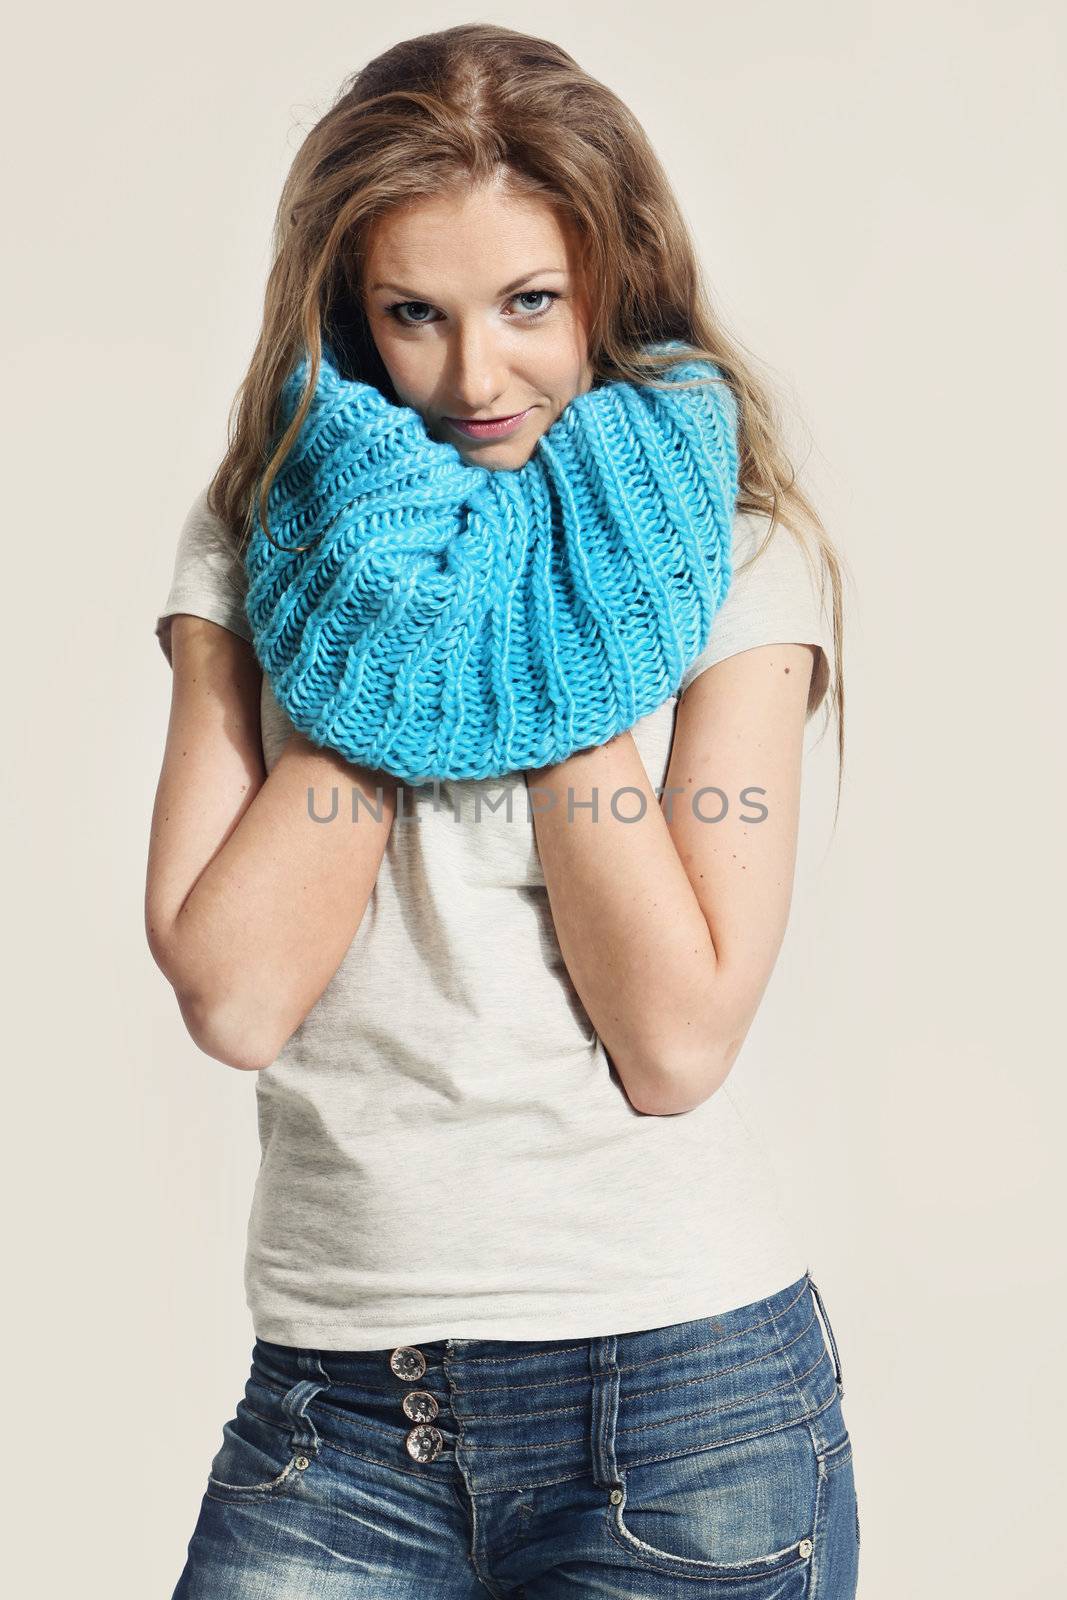 Beautiful girl in a blue scarf by robert_przybysz